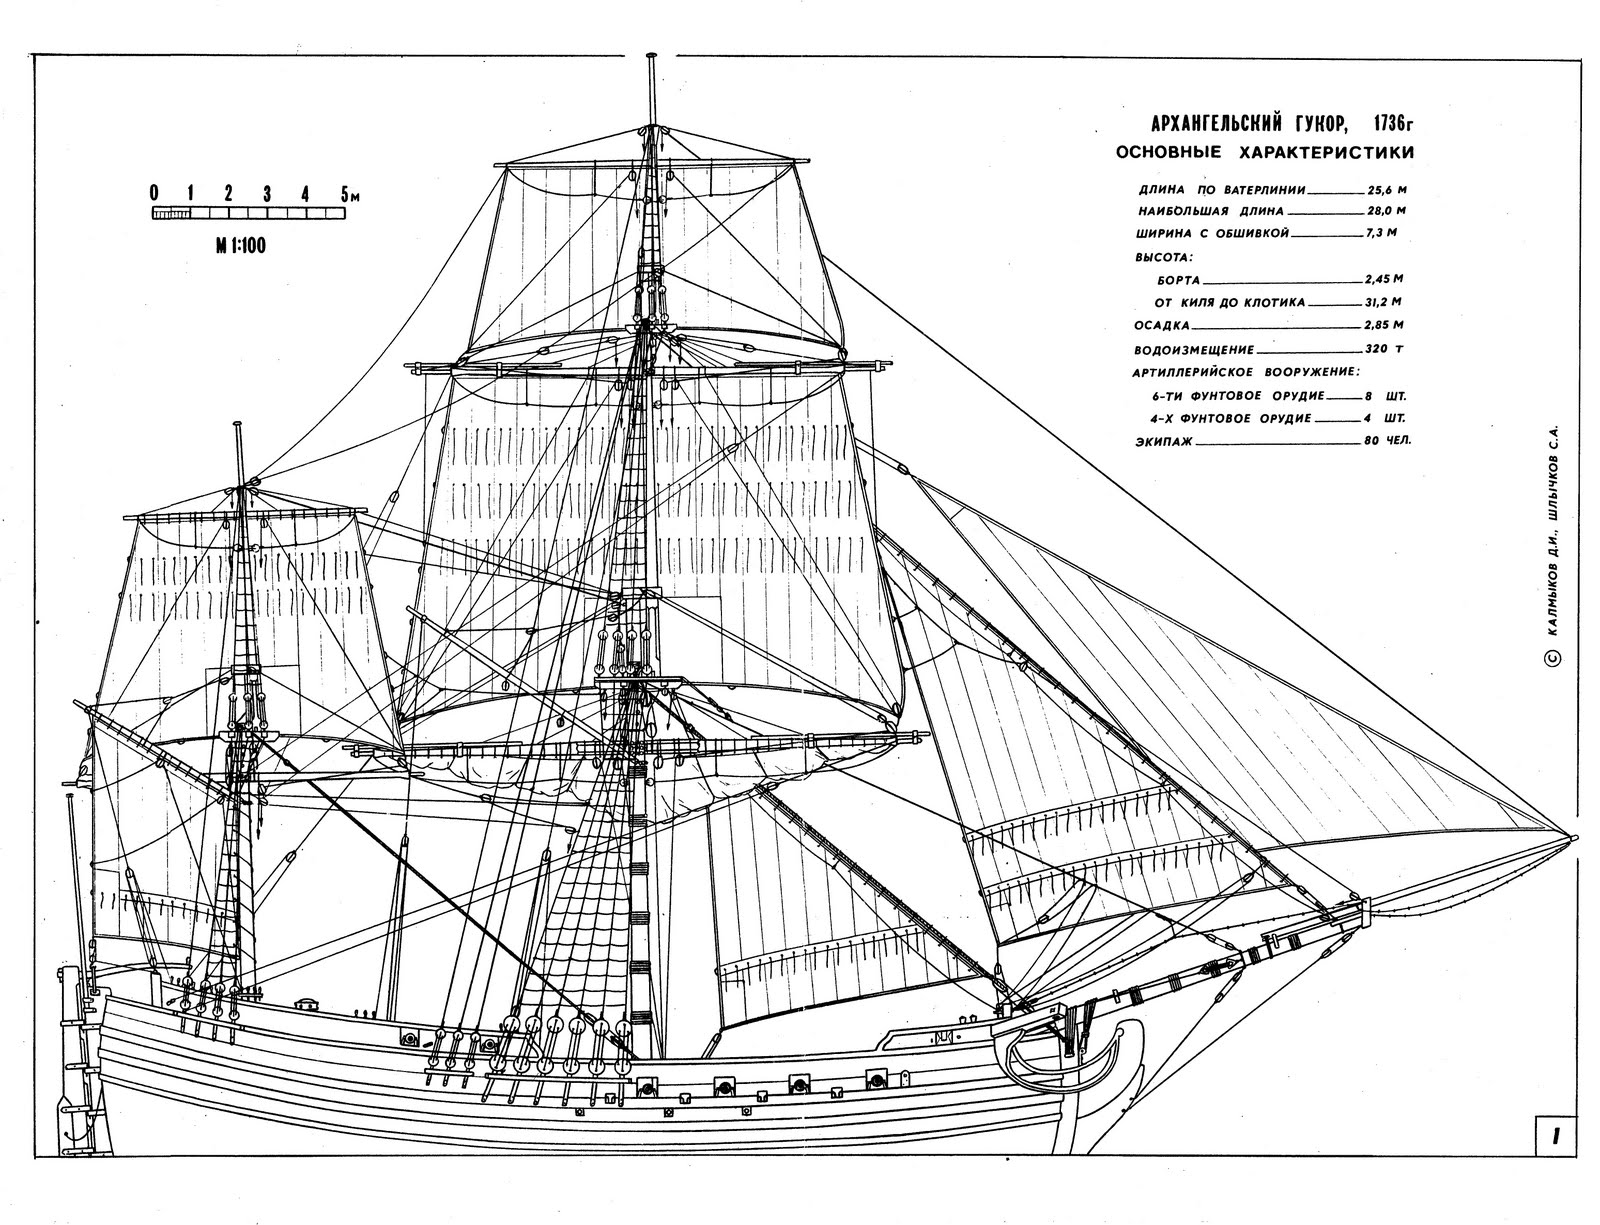 wood ship model plans